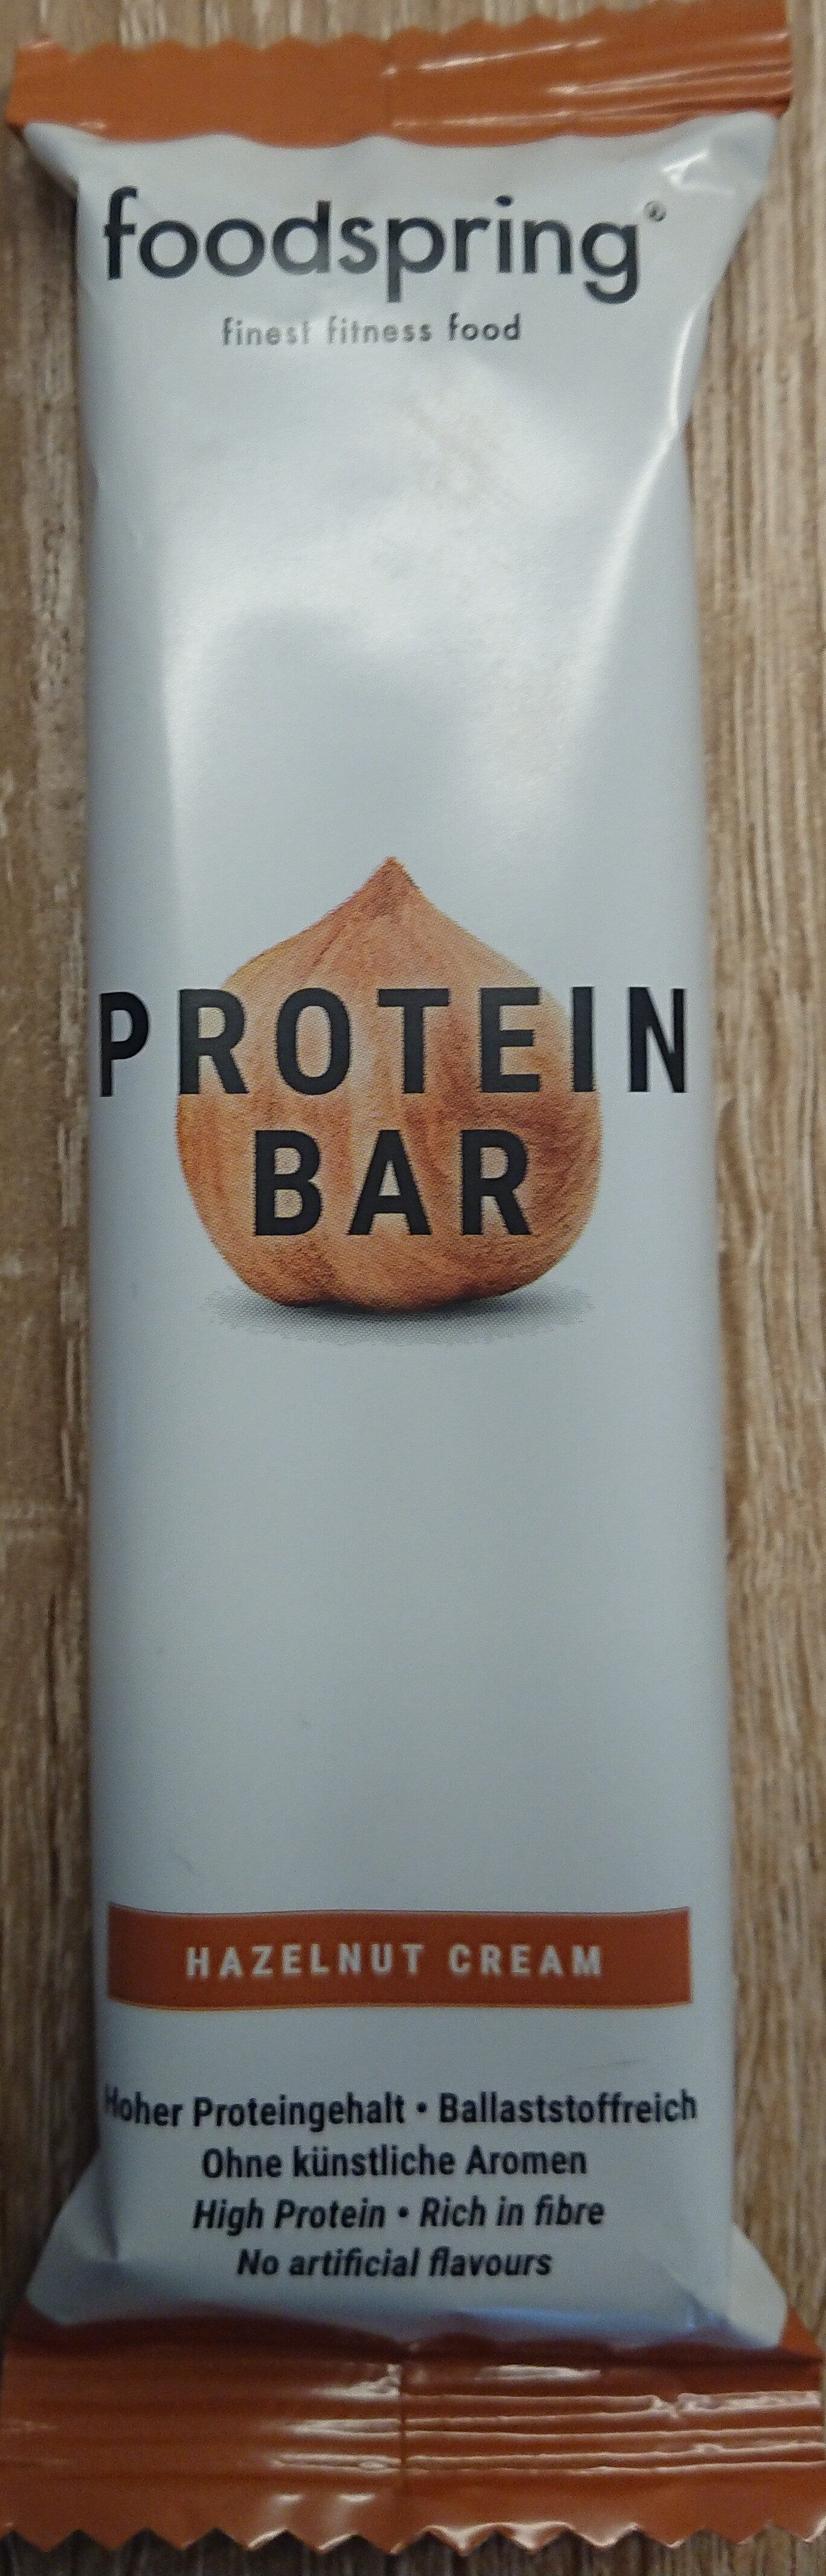 Protein Bar Halzenut Cream - Produit